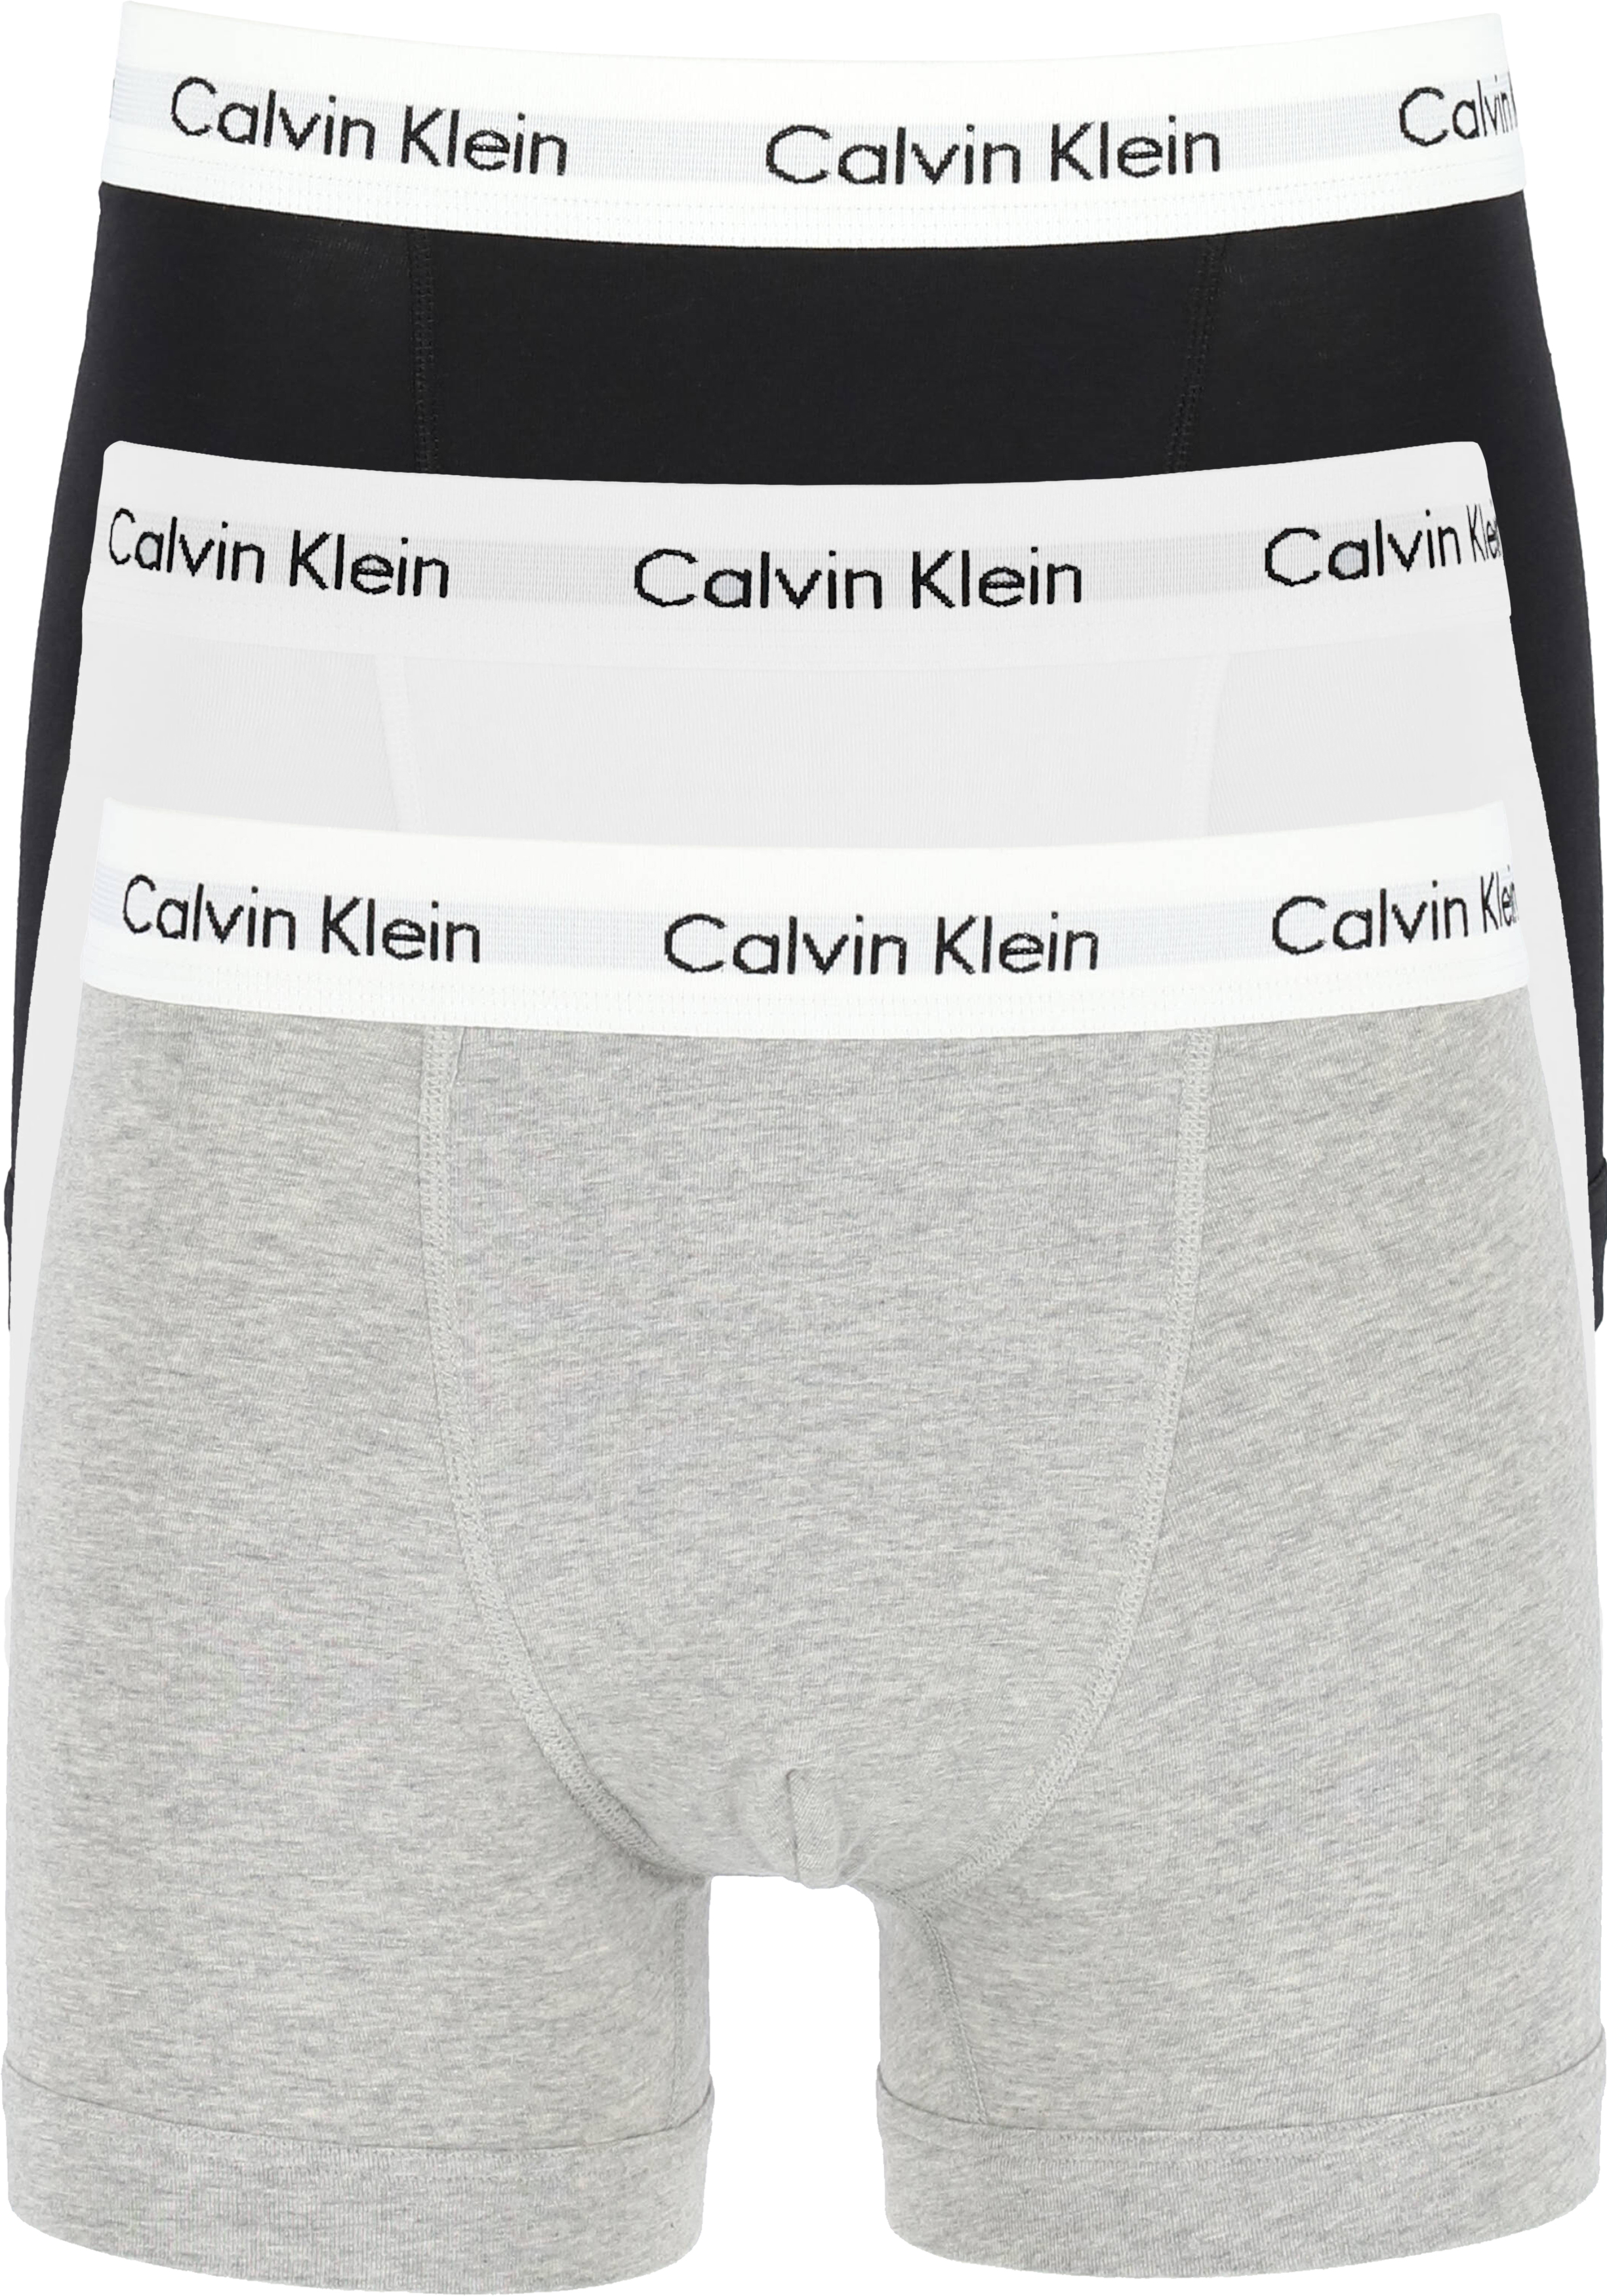 paus stuk amateur Calvin Klein Trunks (3-pack), zwart - grijs en wit - Gratis bezorgd